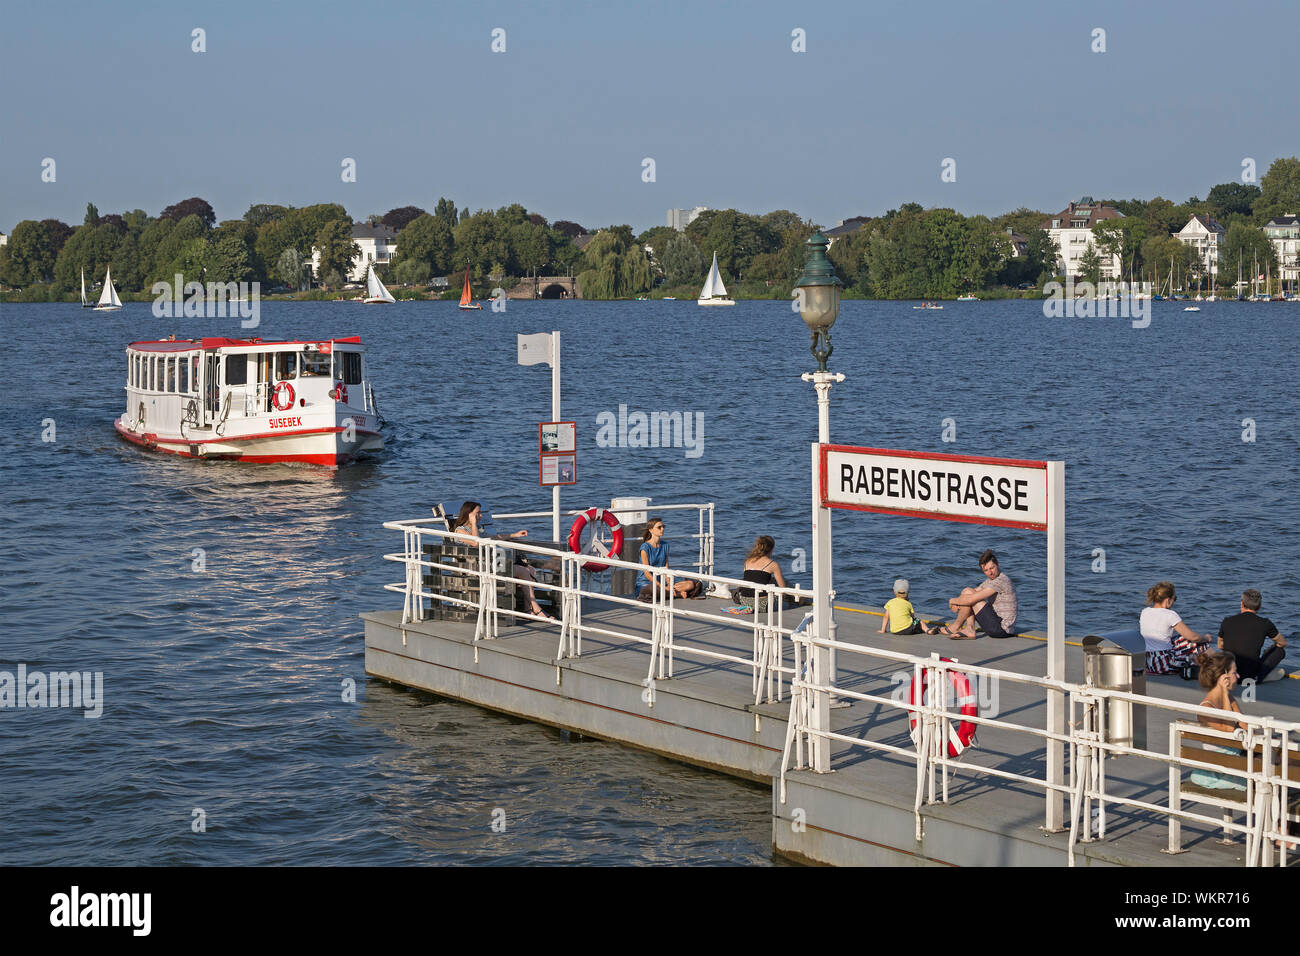 Traghetto sul Lago Alster esterno, ponte traghetto Rabenstrasse, Amburgo, Germania Foto Stock